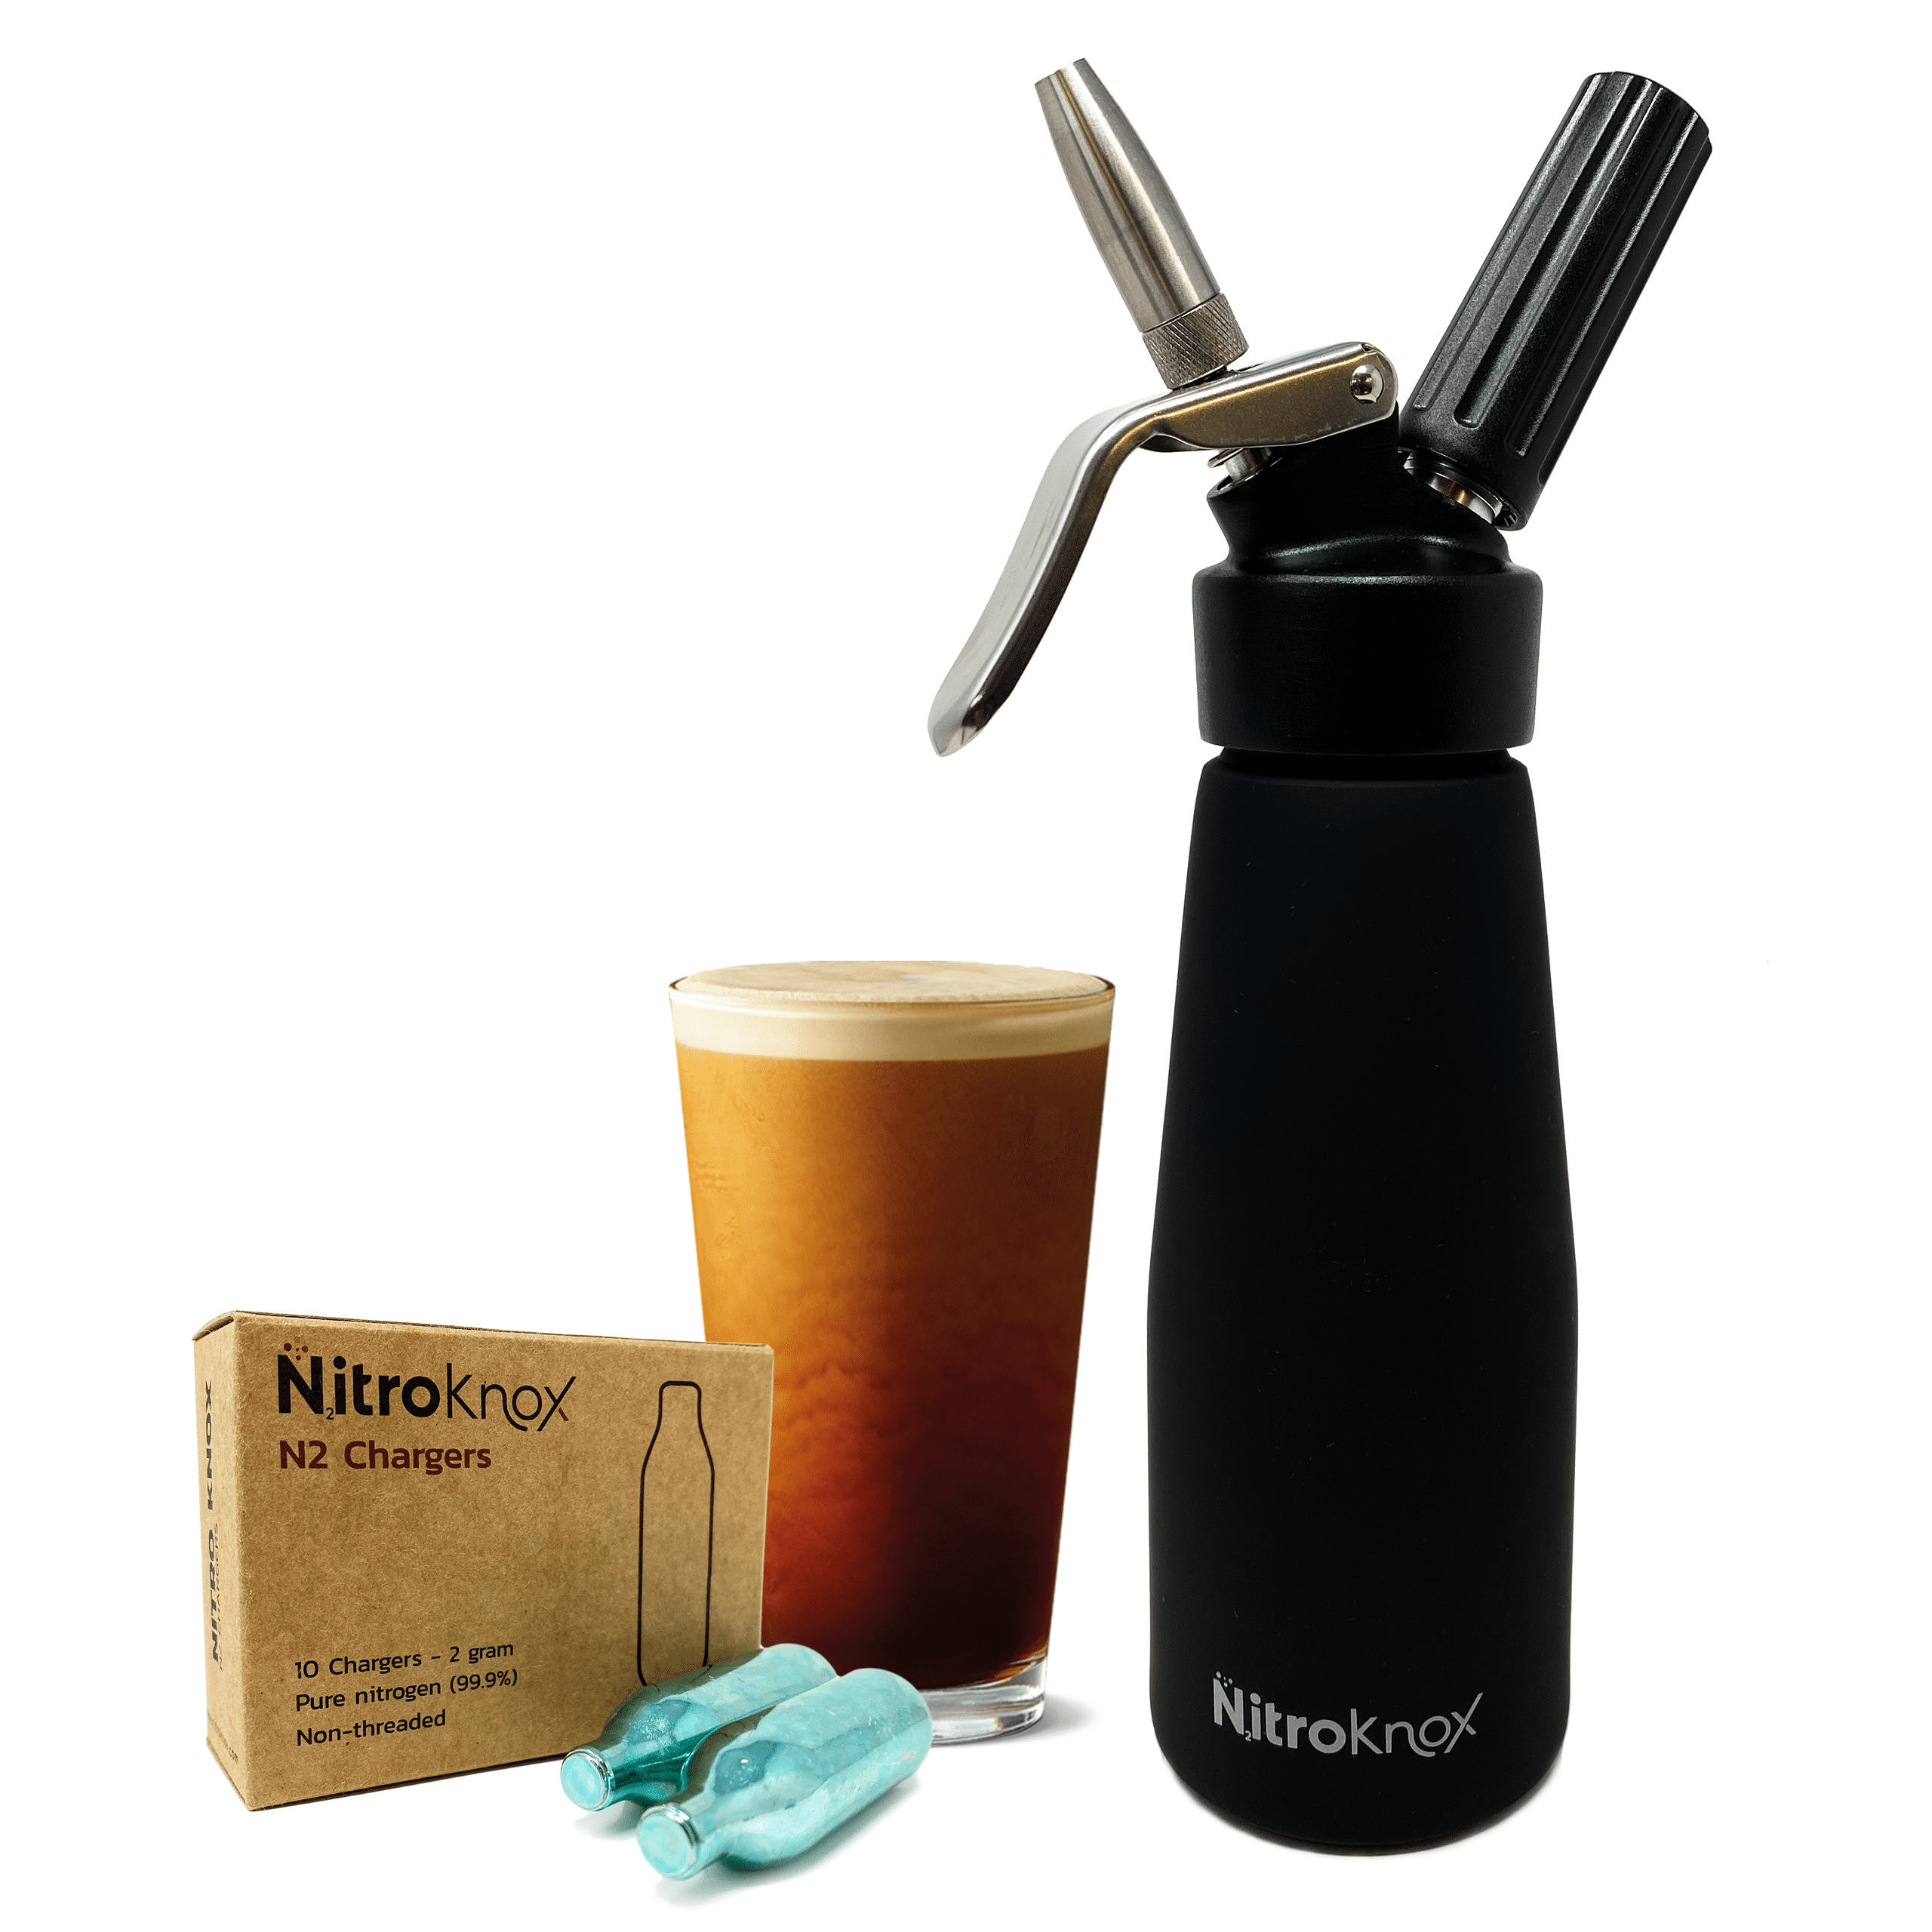 Nitro Cold Brew Coffee Dispenser - enjoy nitrogen-infused beverages